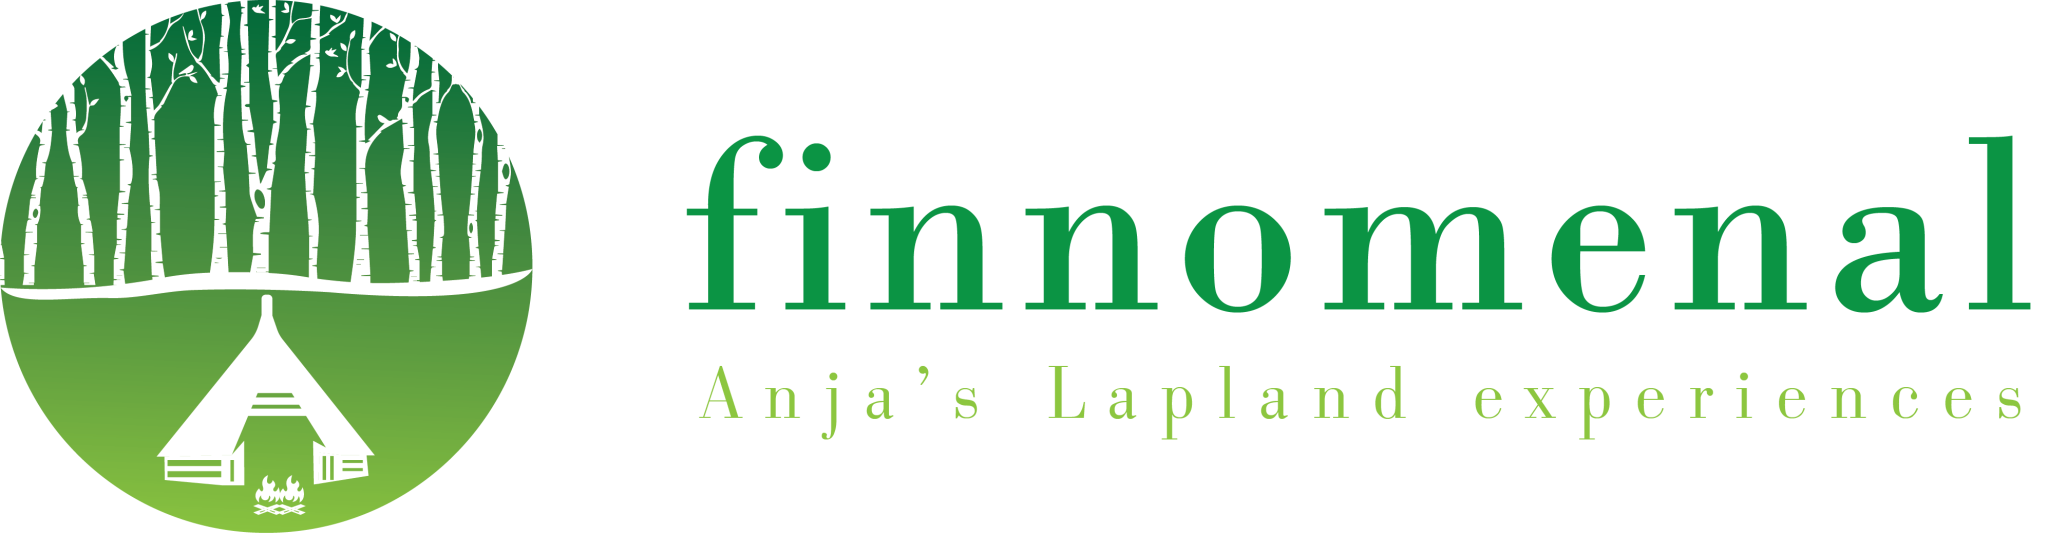 finnomenal lapland logo